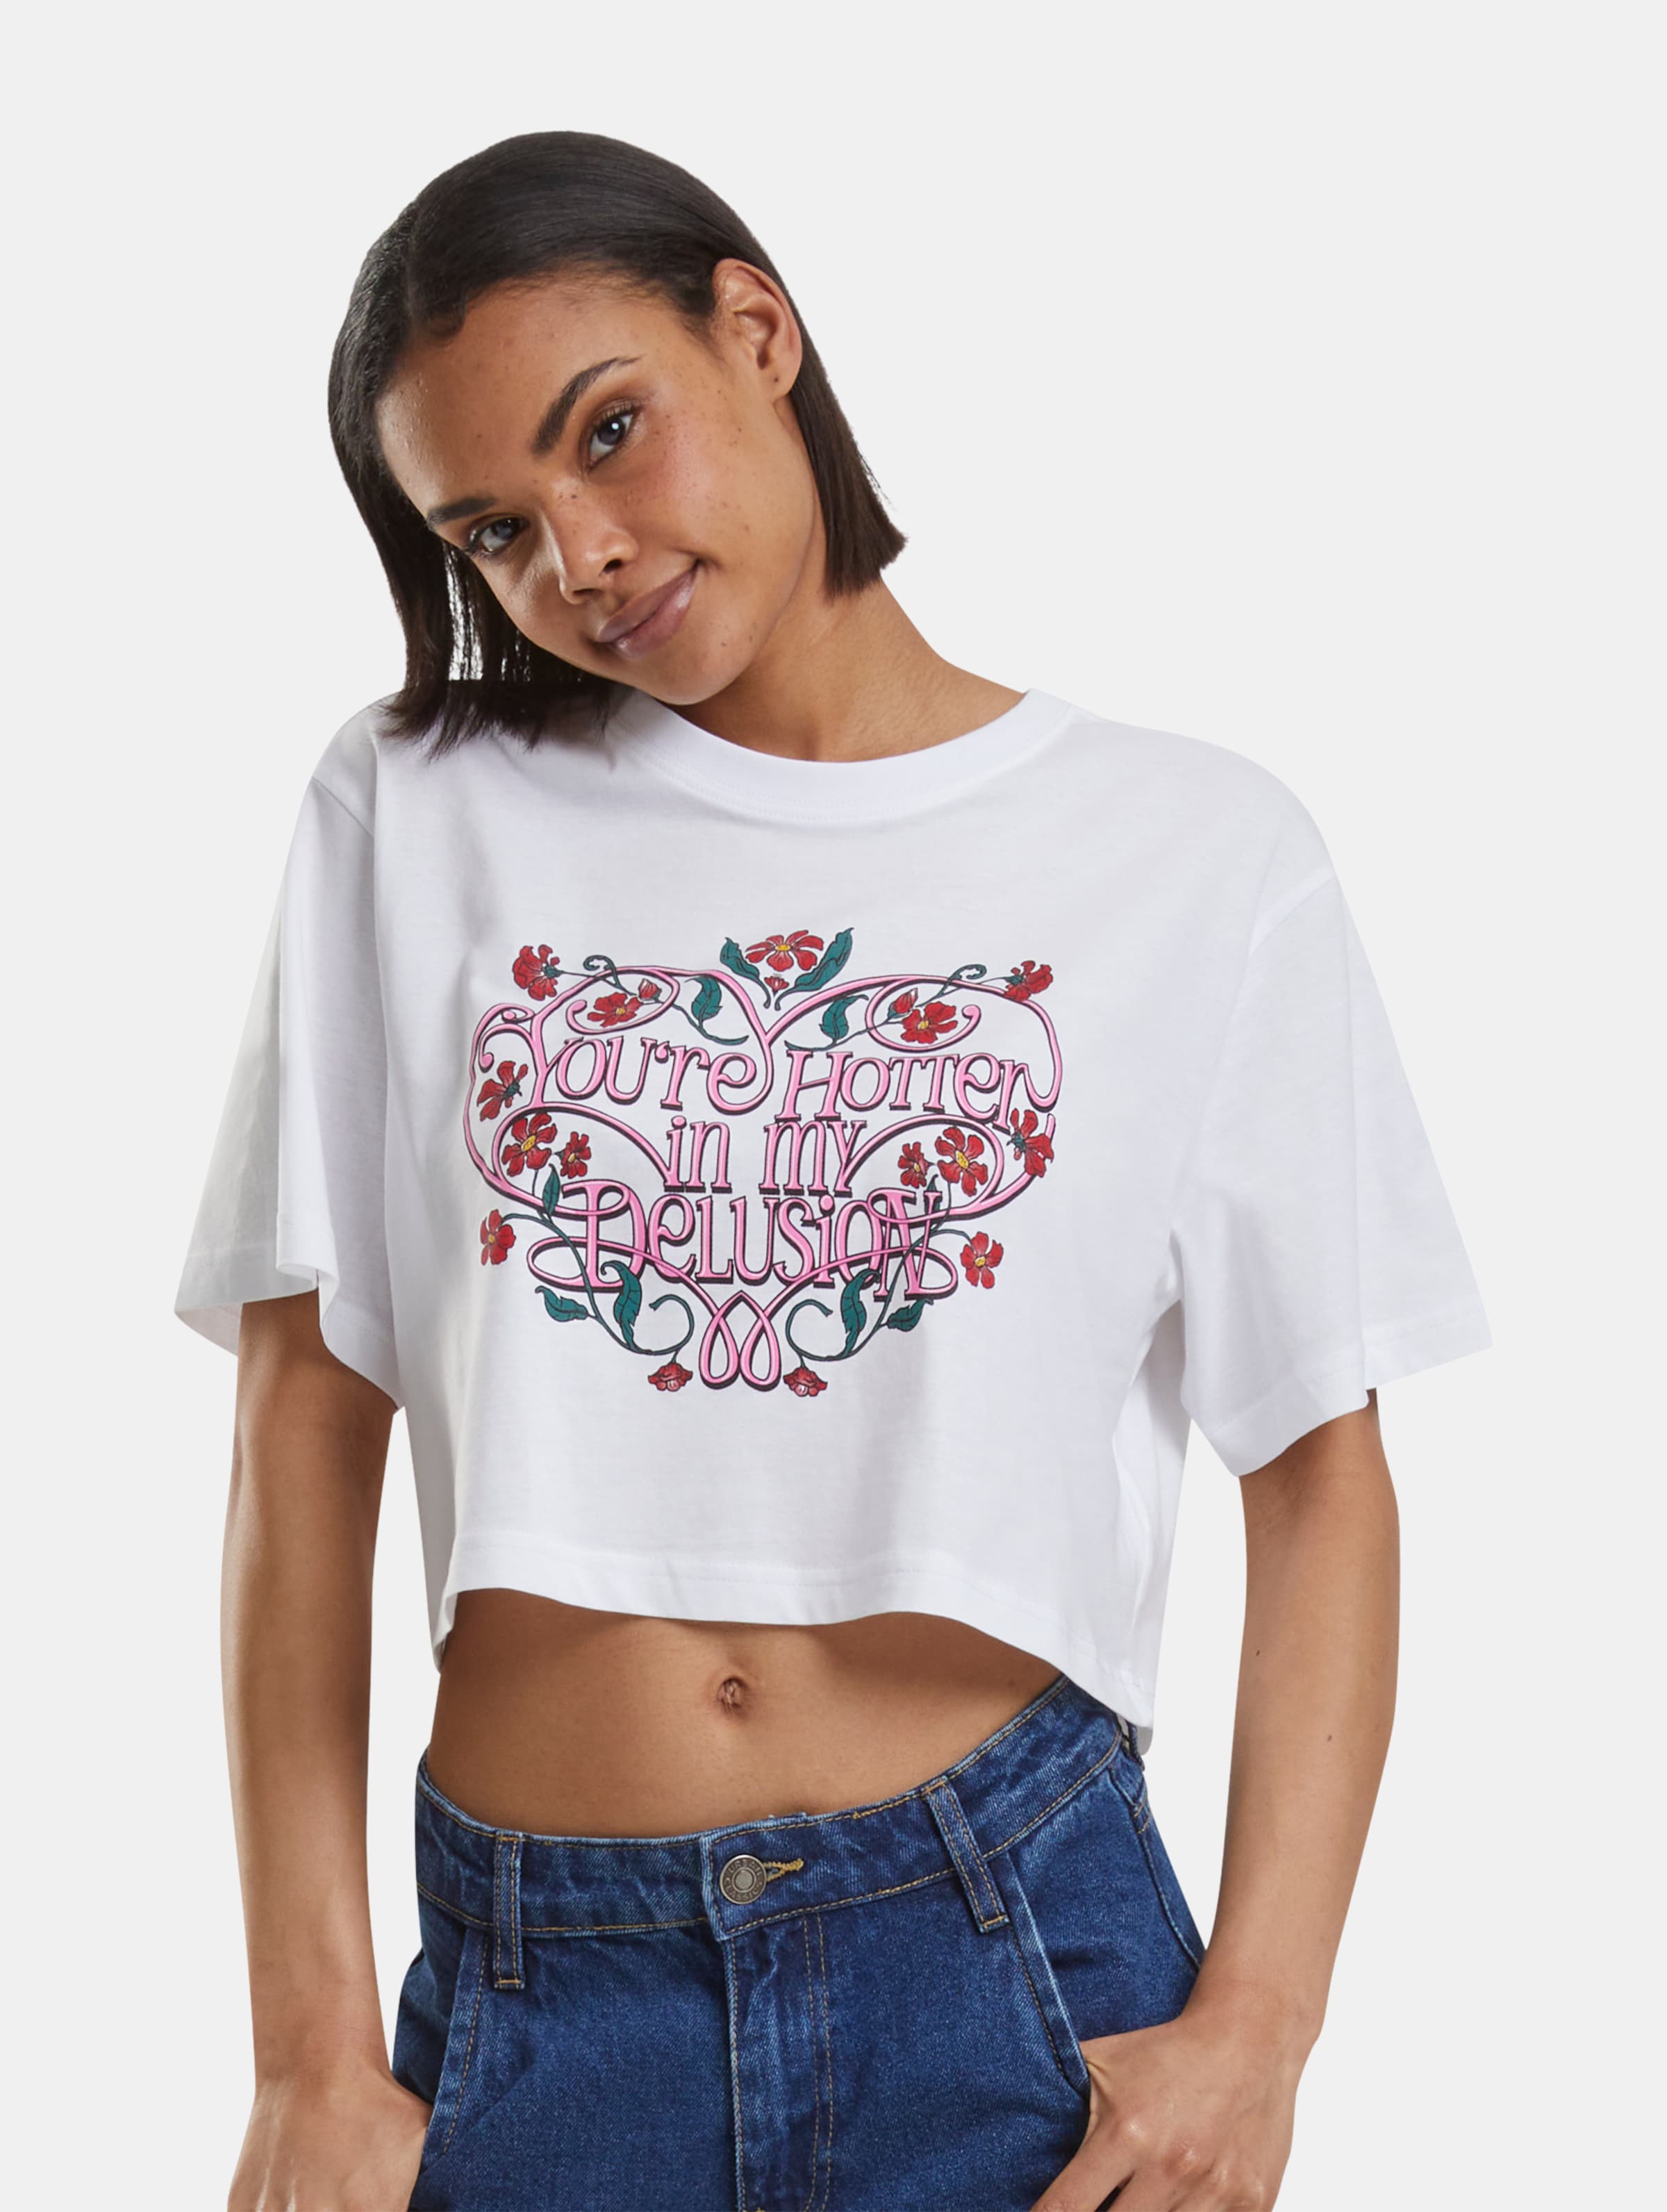 Miss Tee Hotter Delusion Short Overized T-Shirts Frauen,Unisex op kleur wit, Maat M